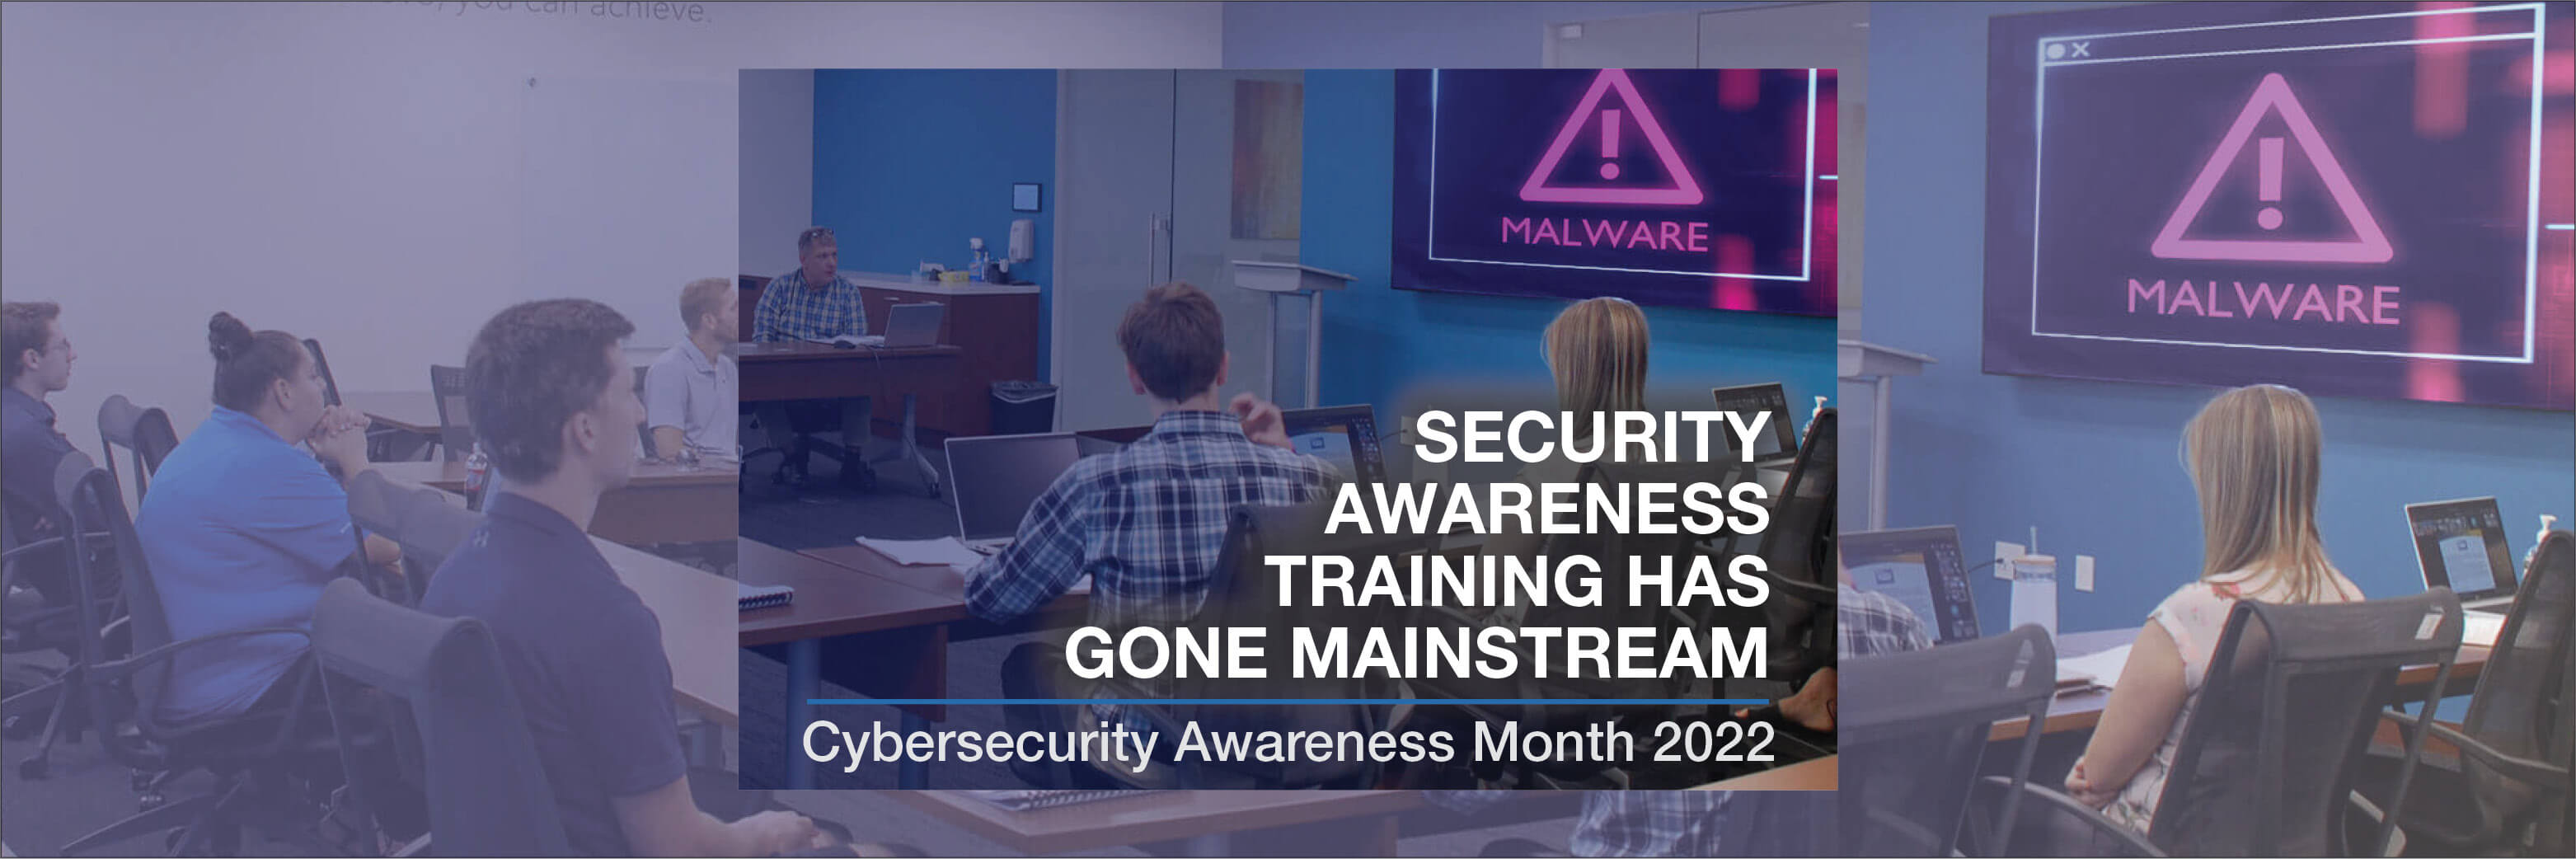 Security Awareness Training Has Gone Mainstream